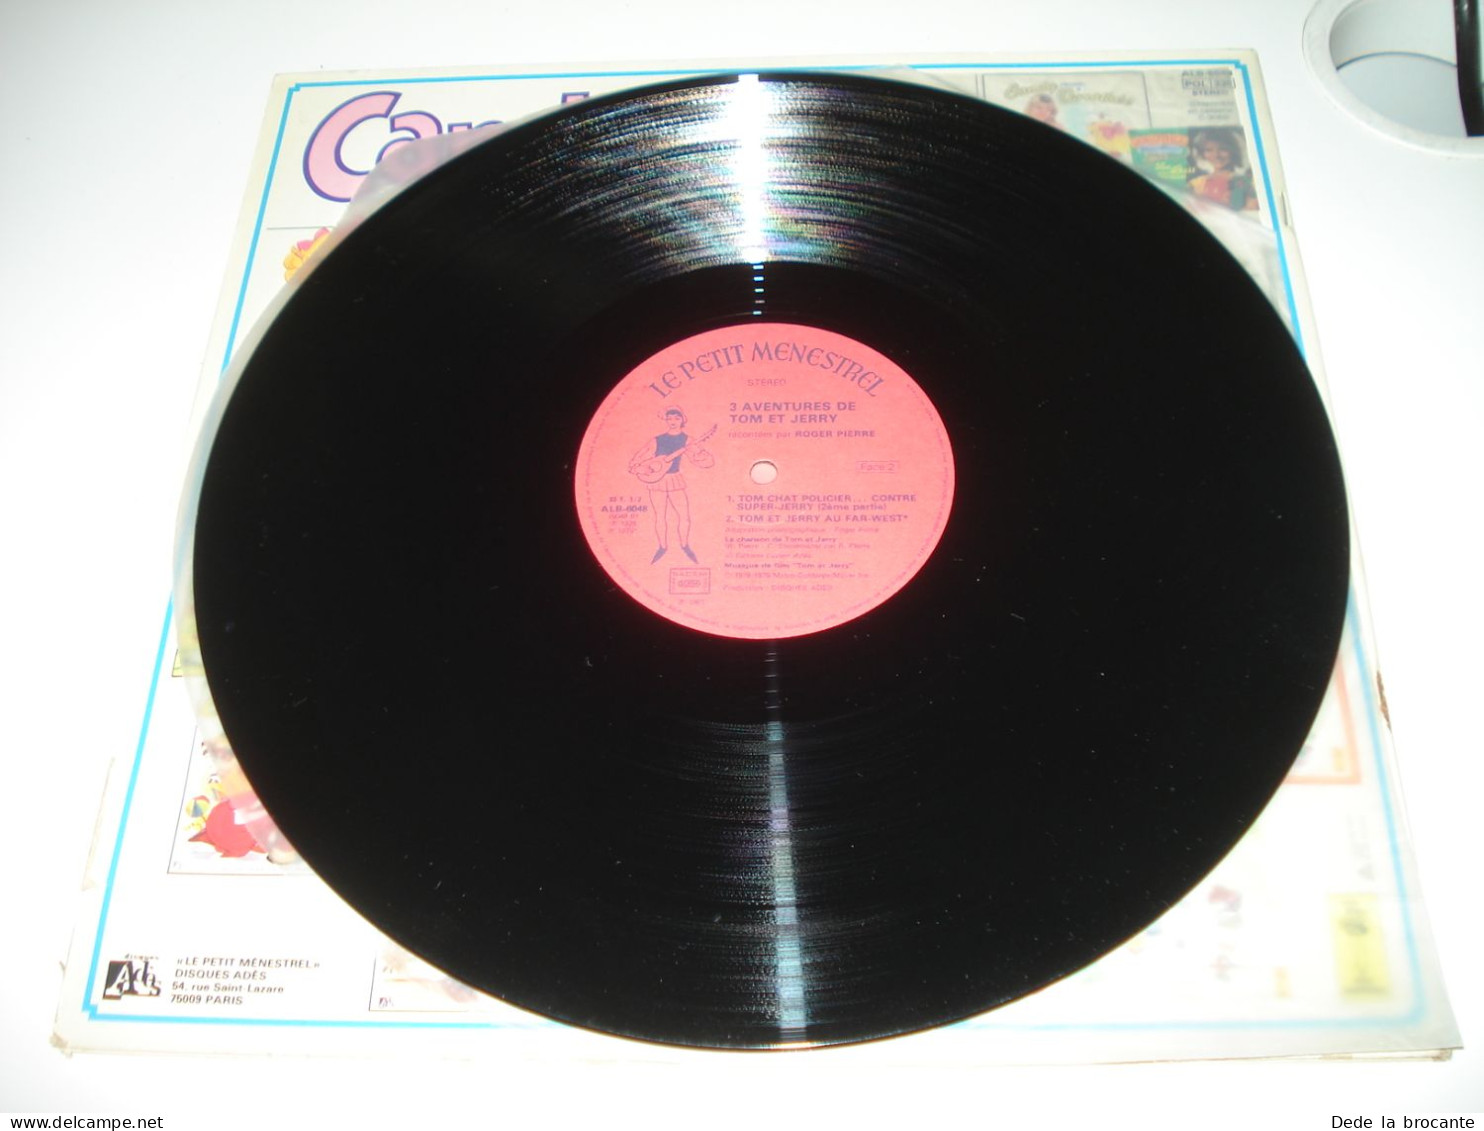 B4 / Tom Jerry - Roger Pierre - LP - Petit Ménestrel - ALB 6048 - FR 1981 - M/G - Bambini